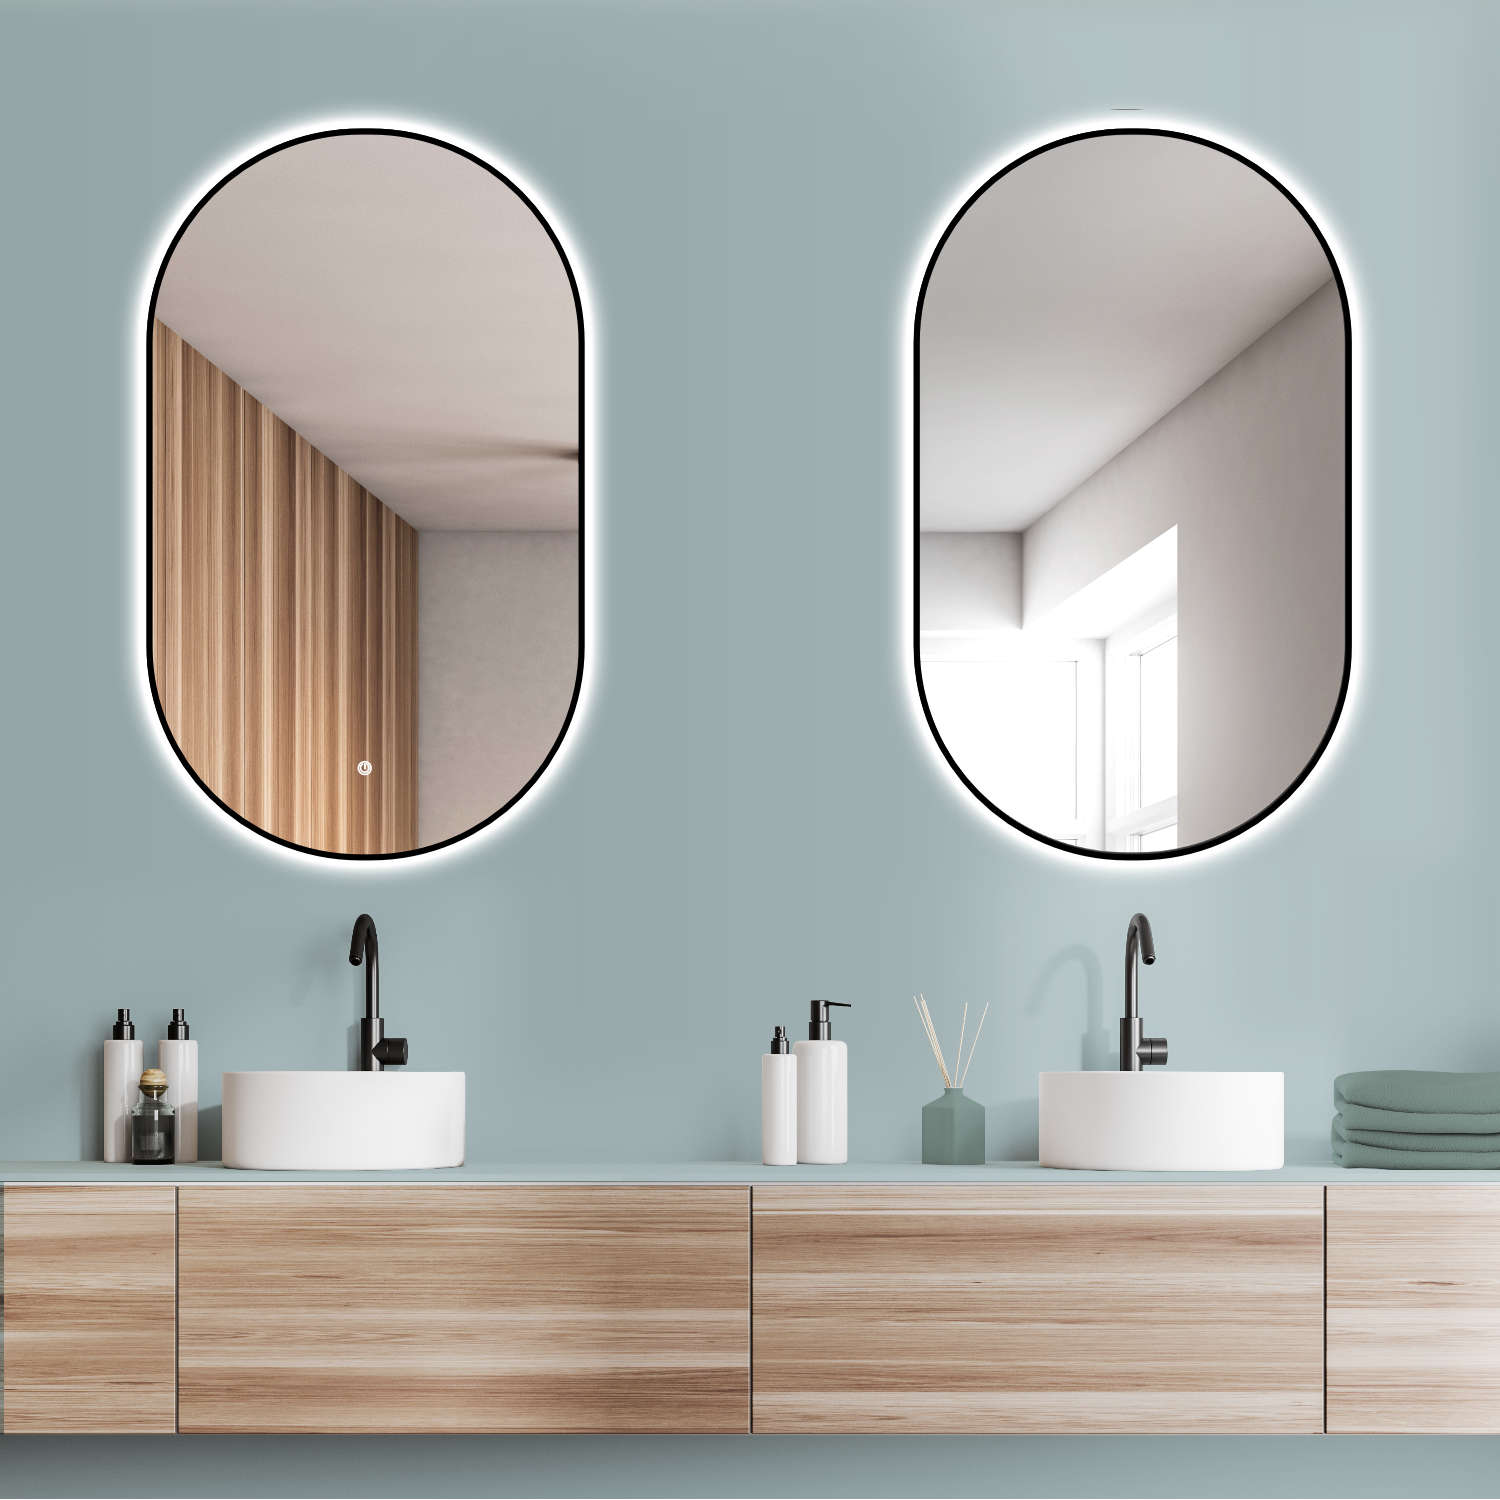 LED Badspiegel, design oval Dekor Spiegel, Badspiegel mit led Beleuchtung